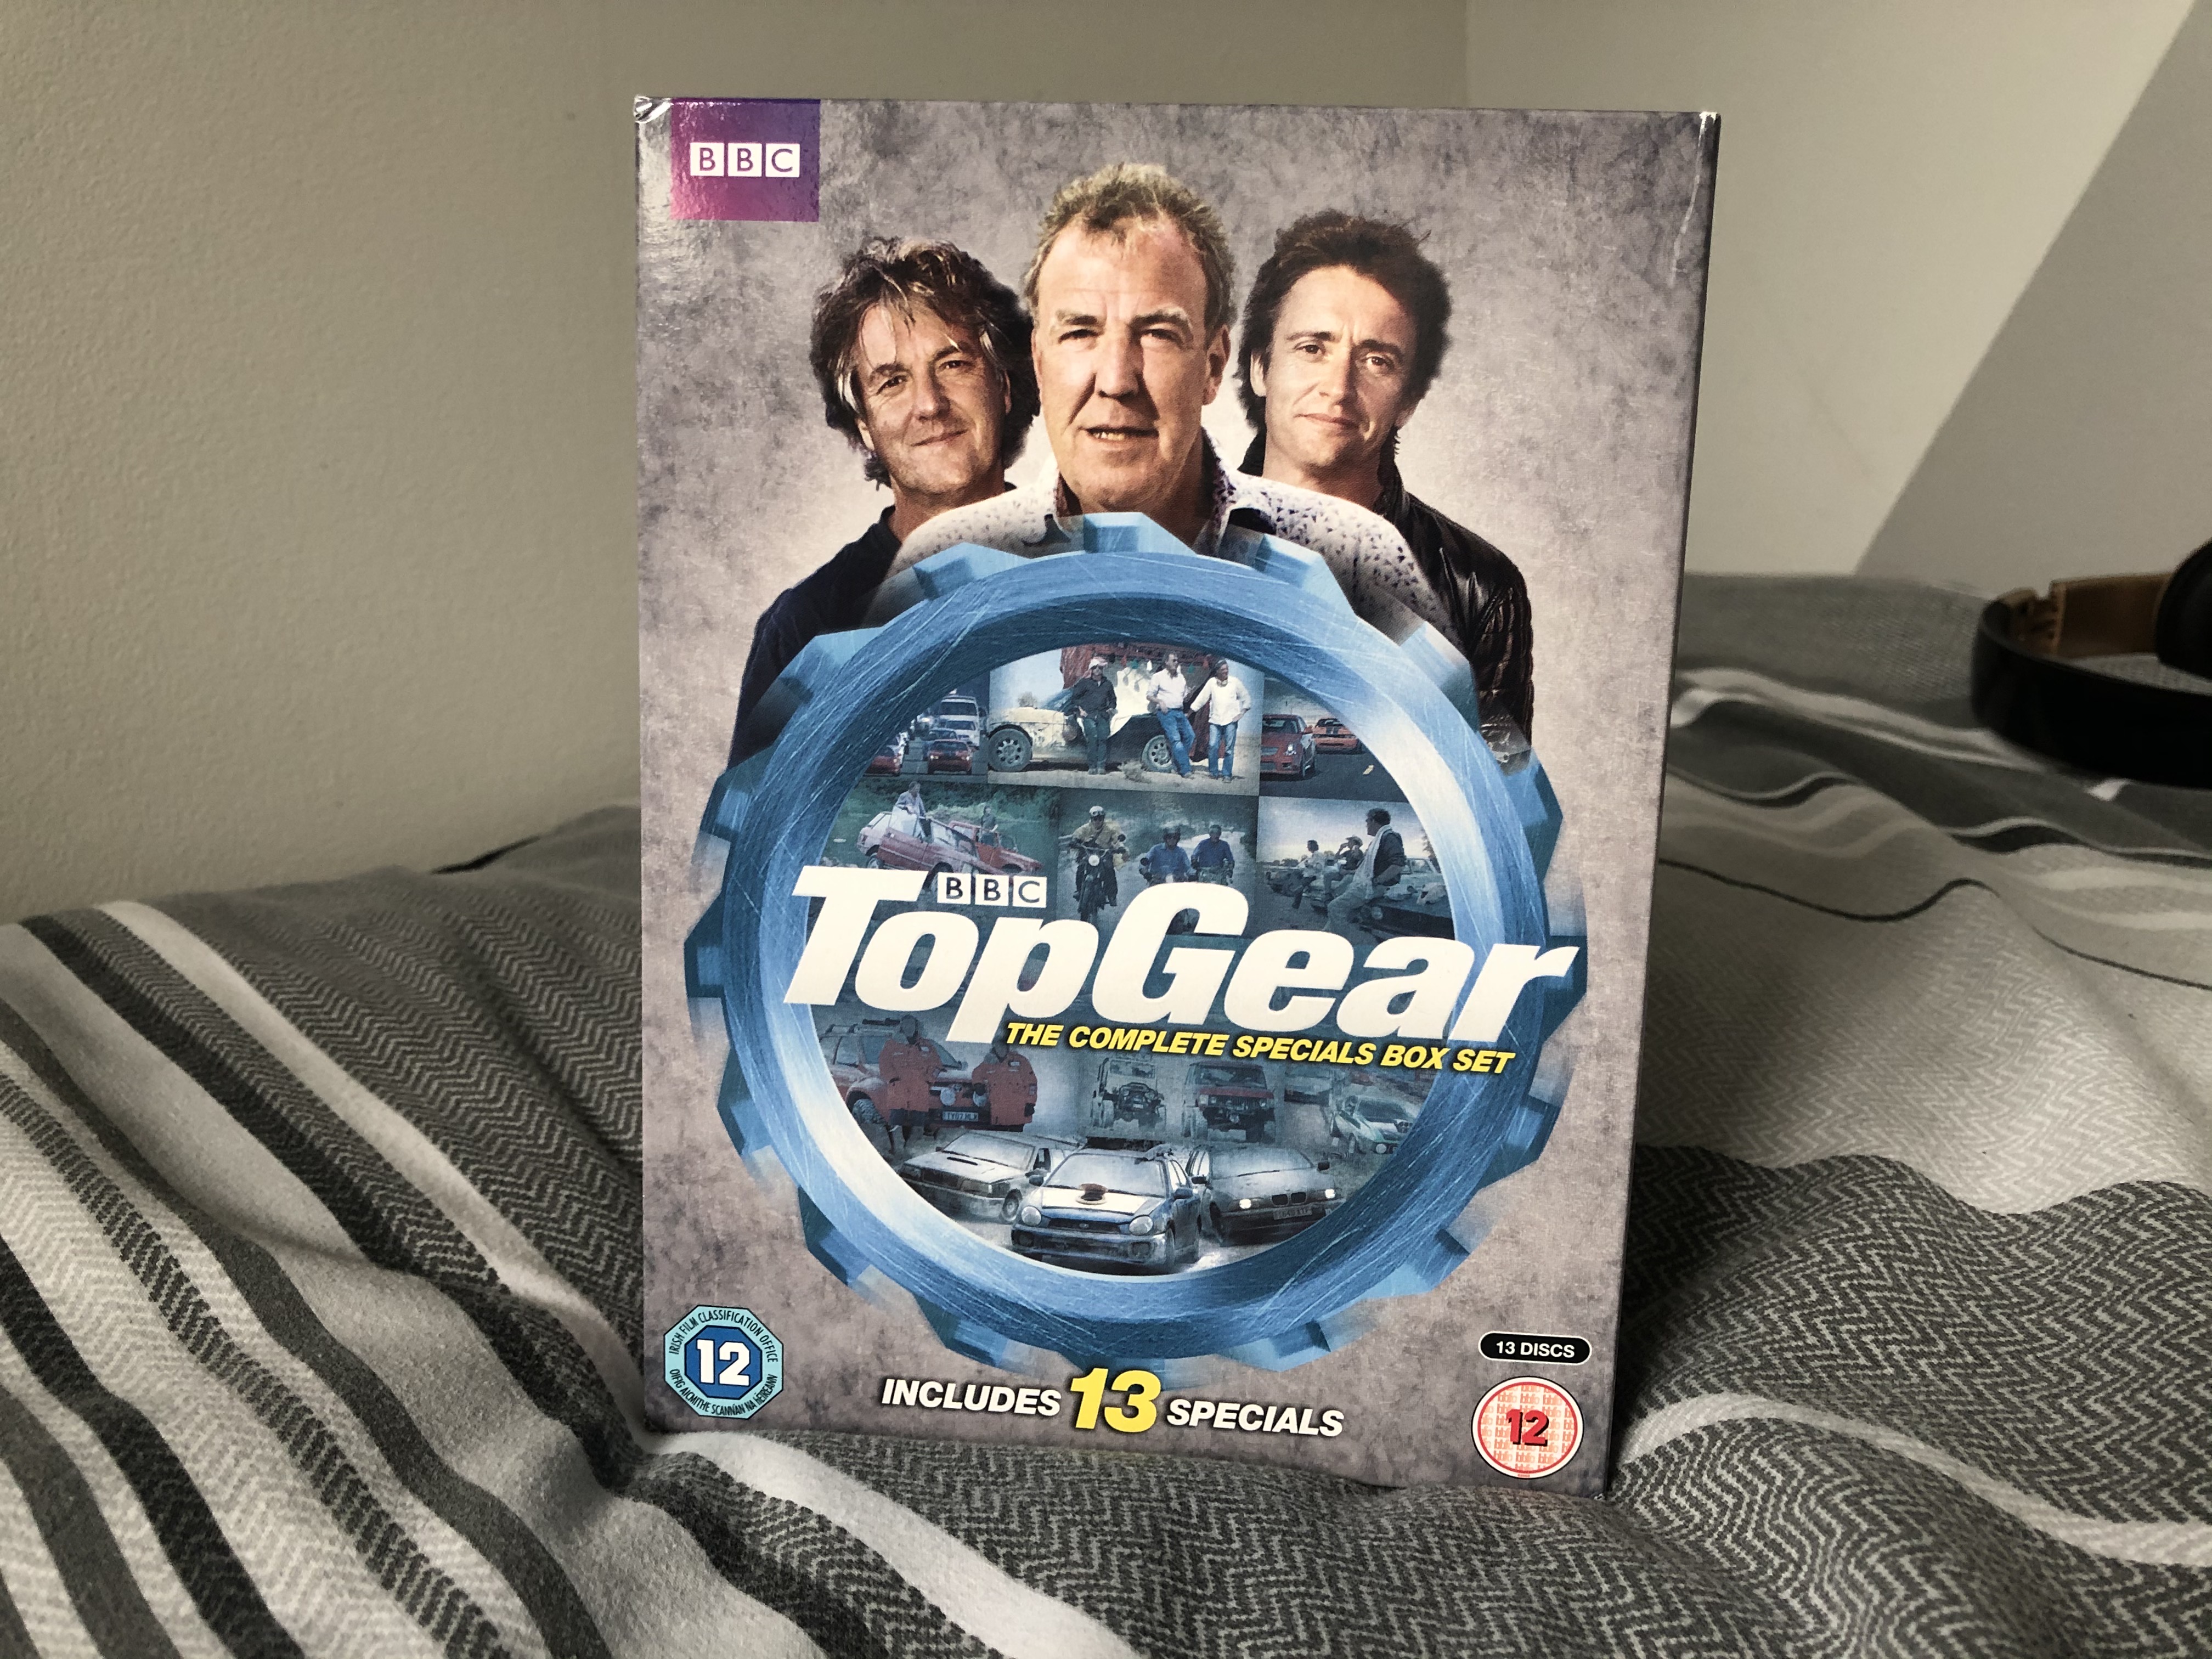 Top Gear: The Complete Specials Boxset by JennyRichardBlakina on